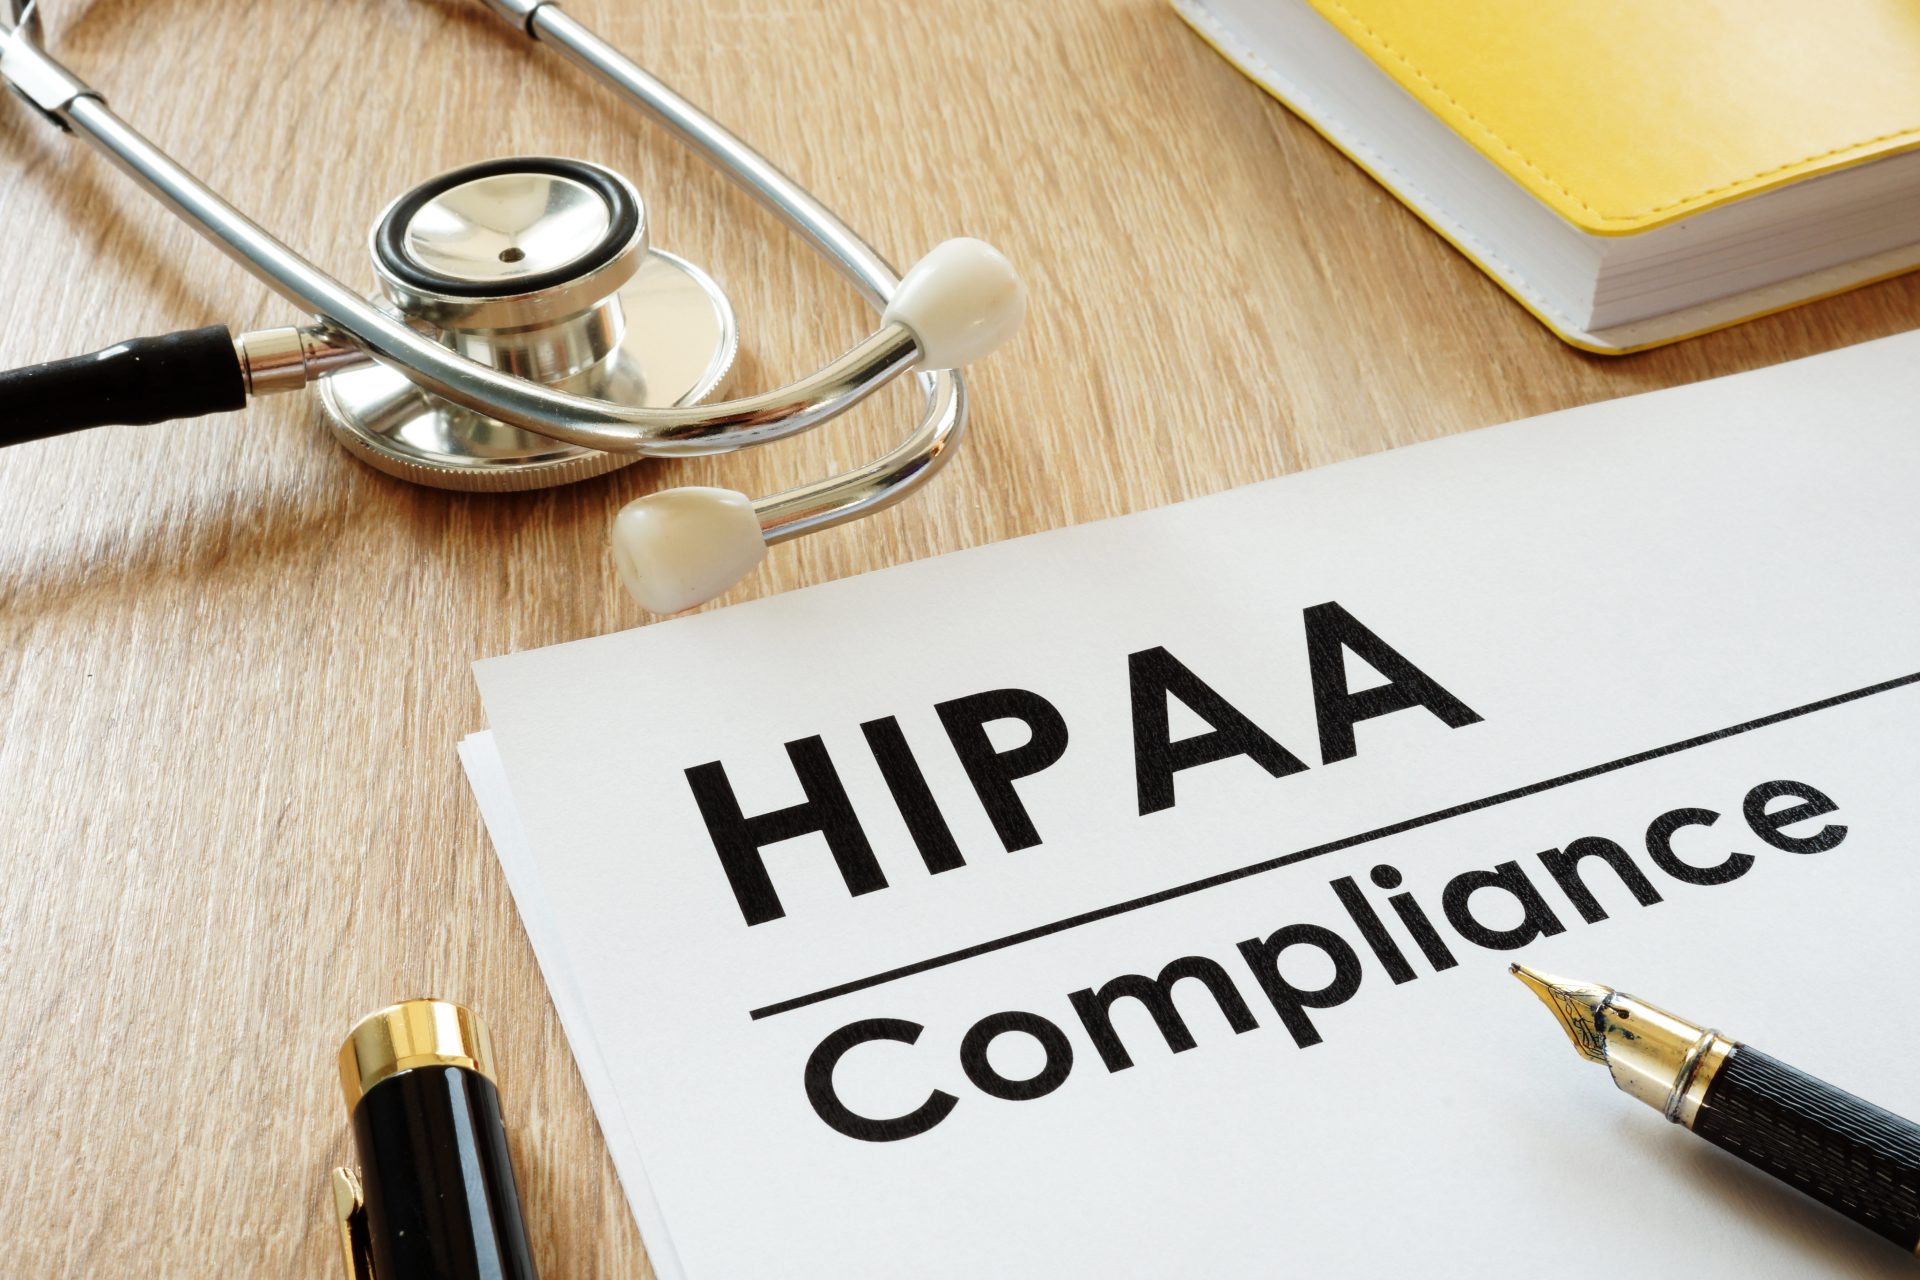 HIPAA Compliance application and stethoscope on a desk